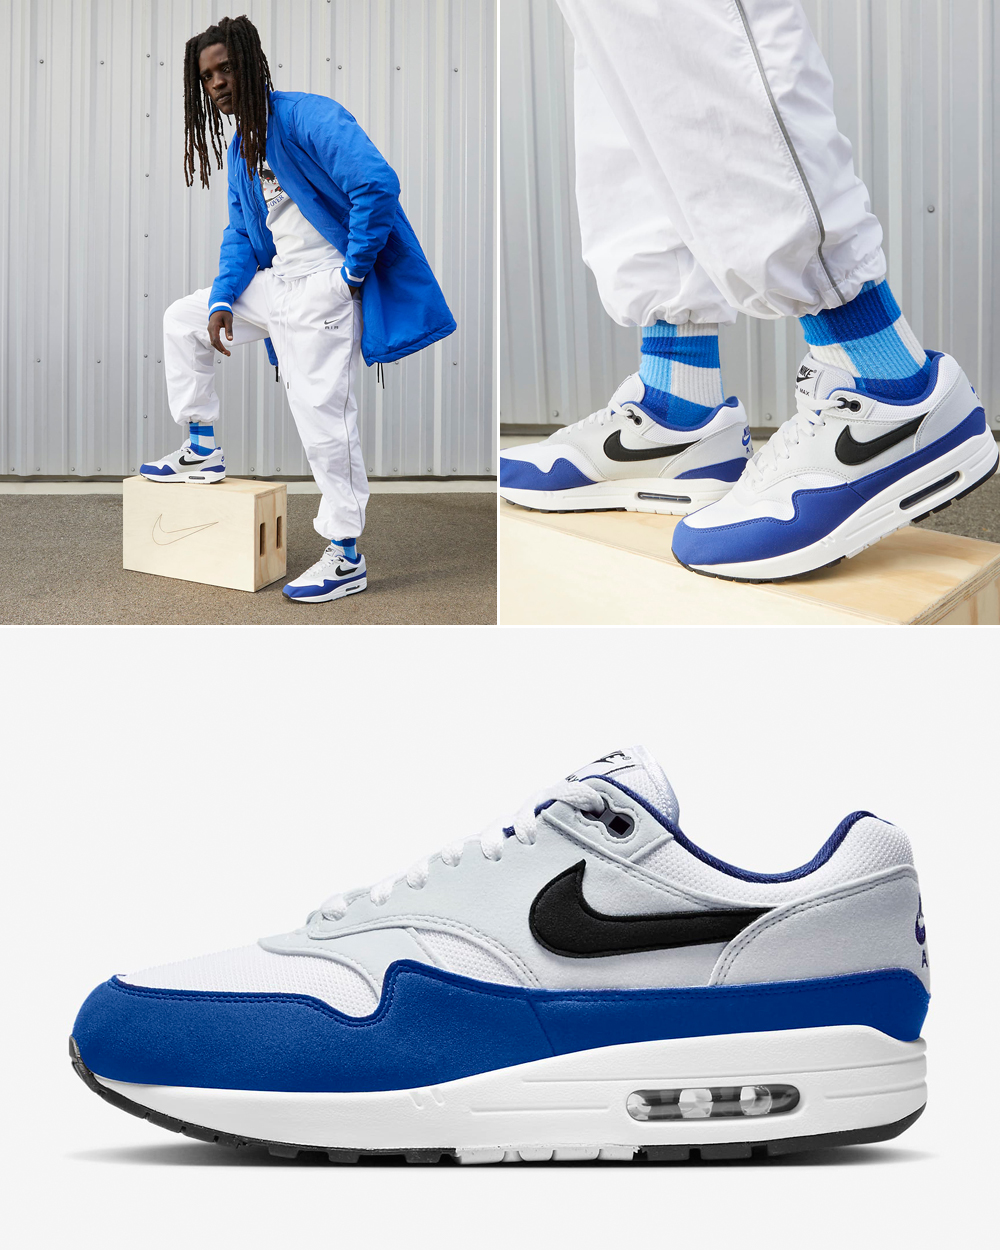 Nike-Air-Max-1-Deep-Royal-Blue-Outfits